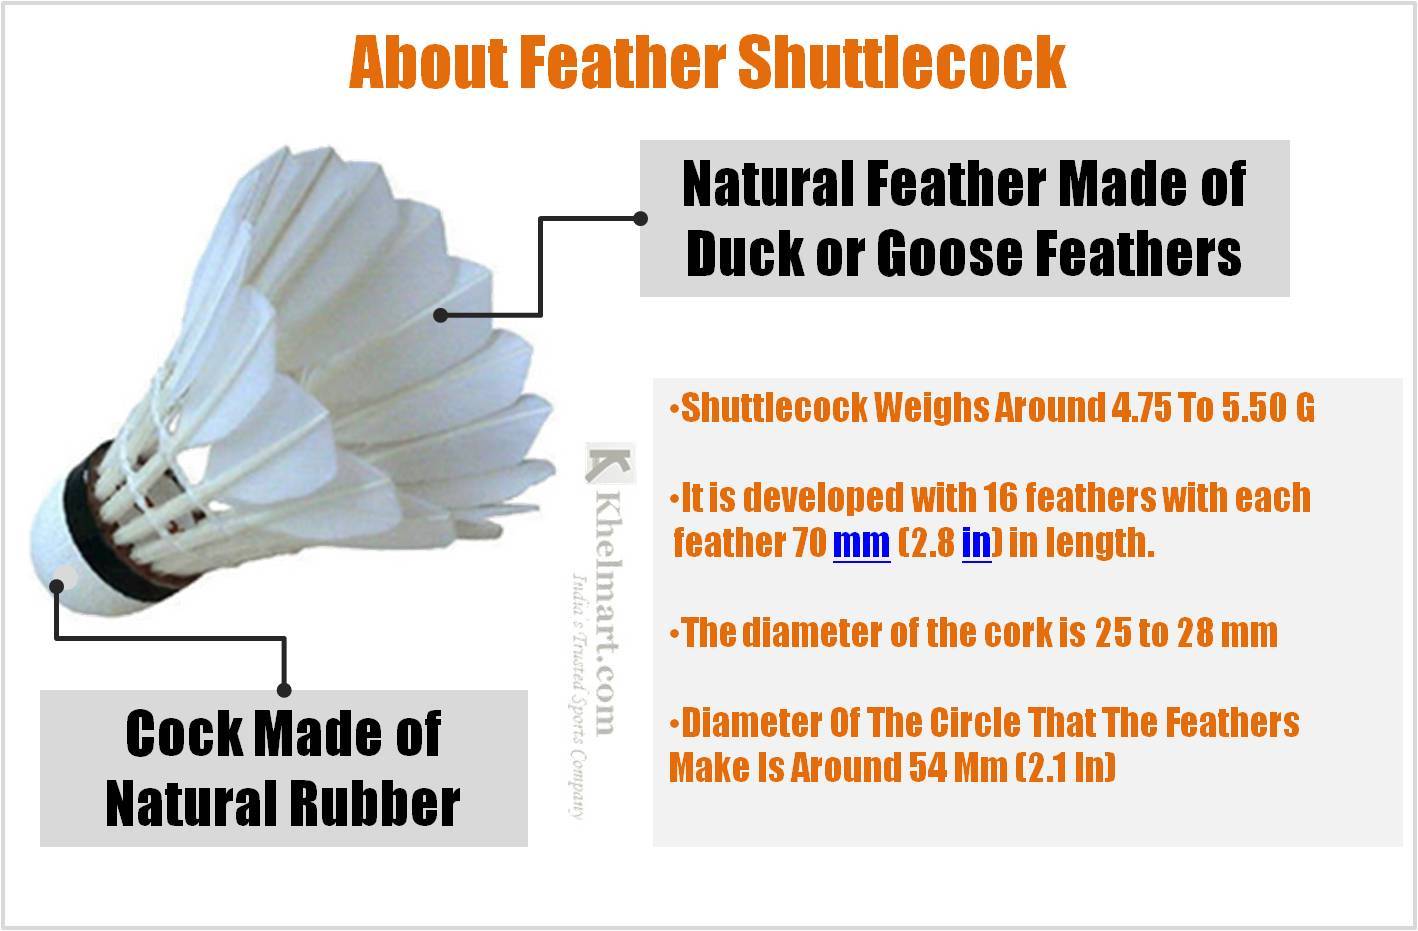 About_Feather_Shuttlecocks.jpg 